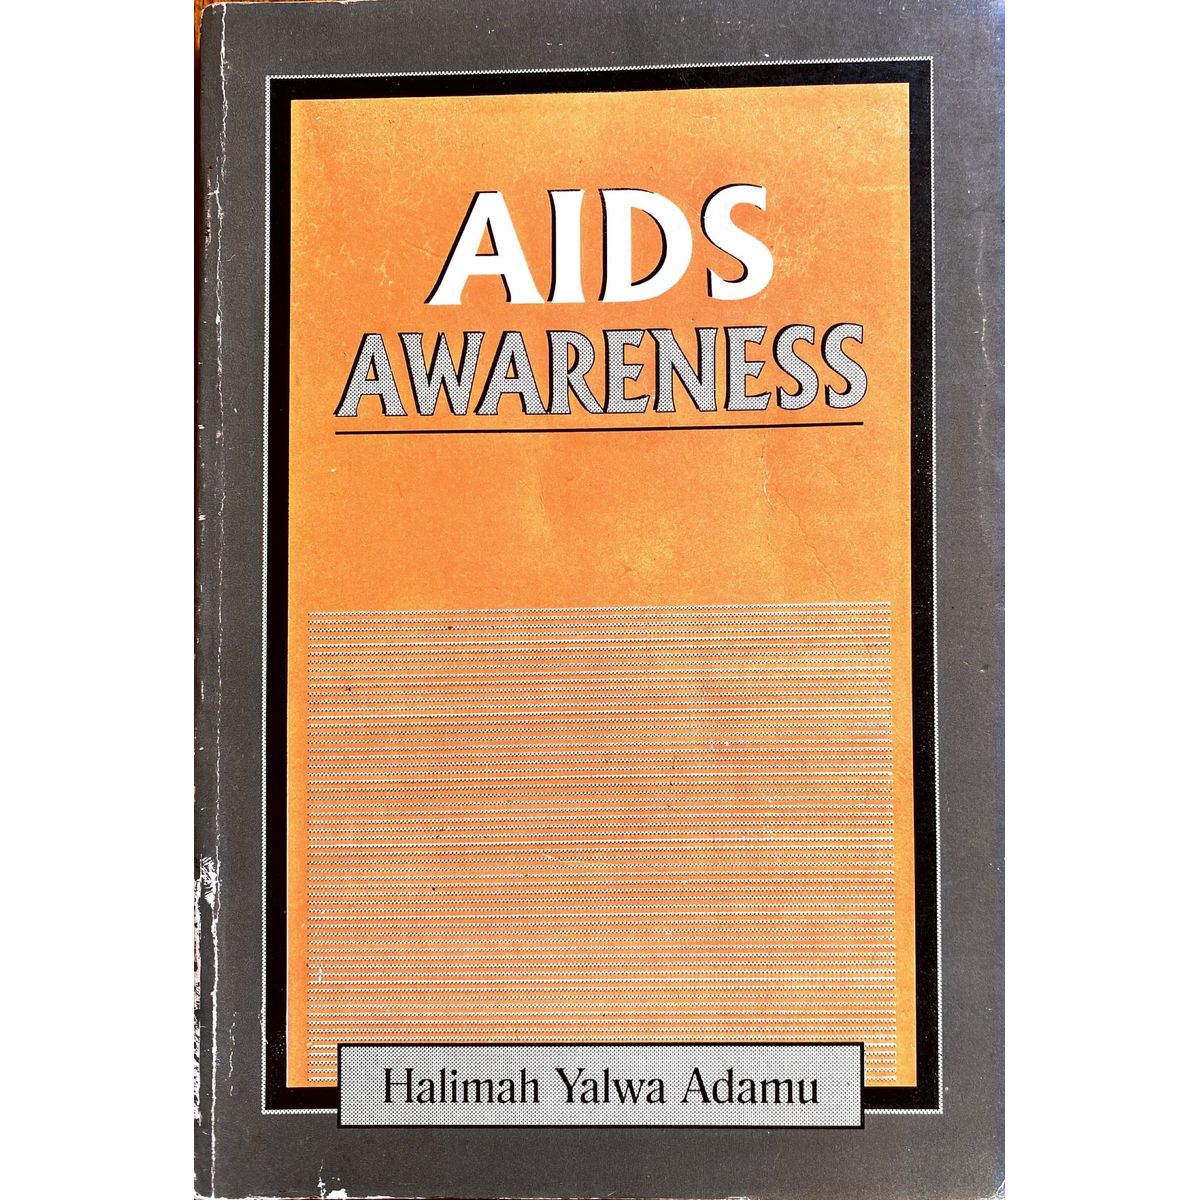 ISBN: 9789780292546 / 9780292543 - Aids Awareness by Halimah Yalwa Adamu [2001]